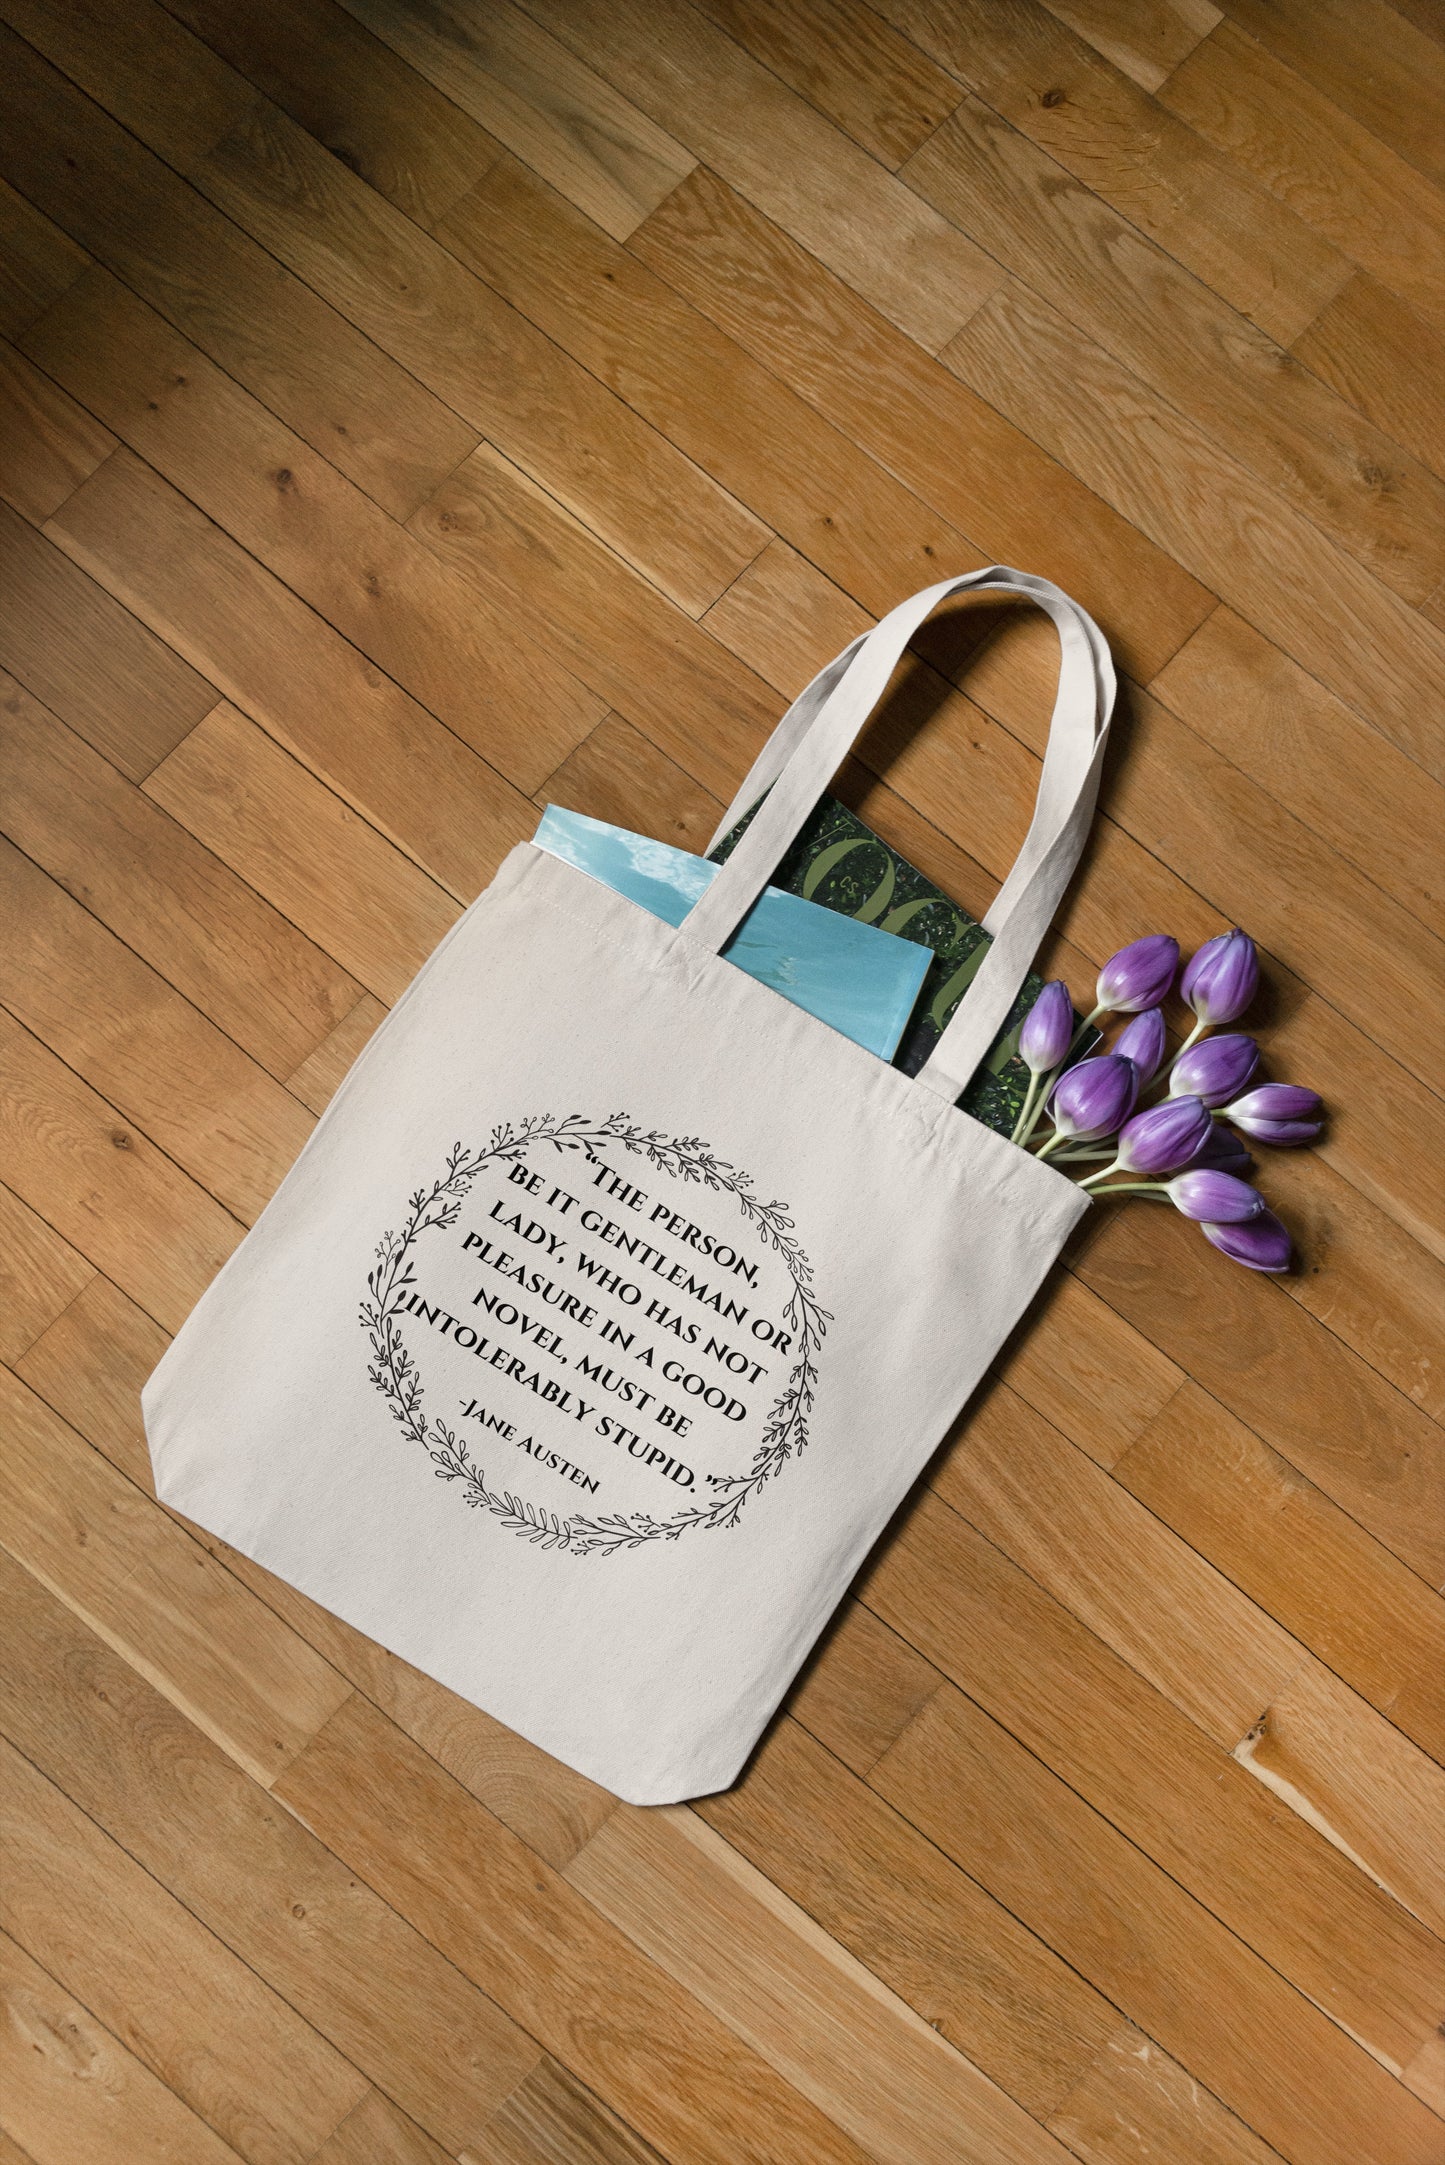 Jane Austen Quote Canvas Tote Bag